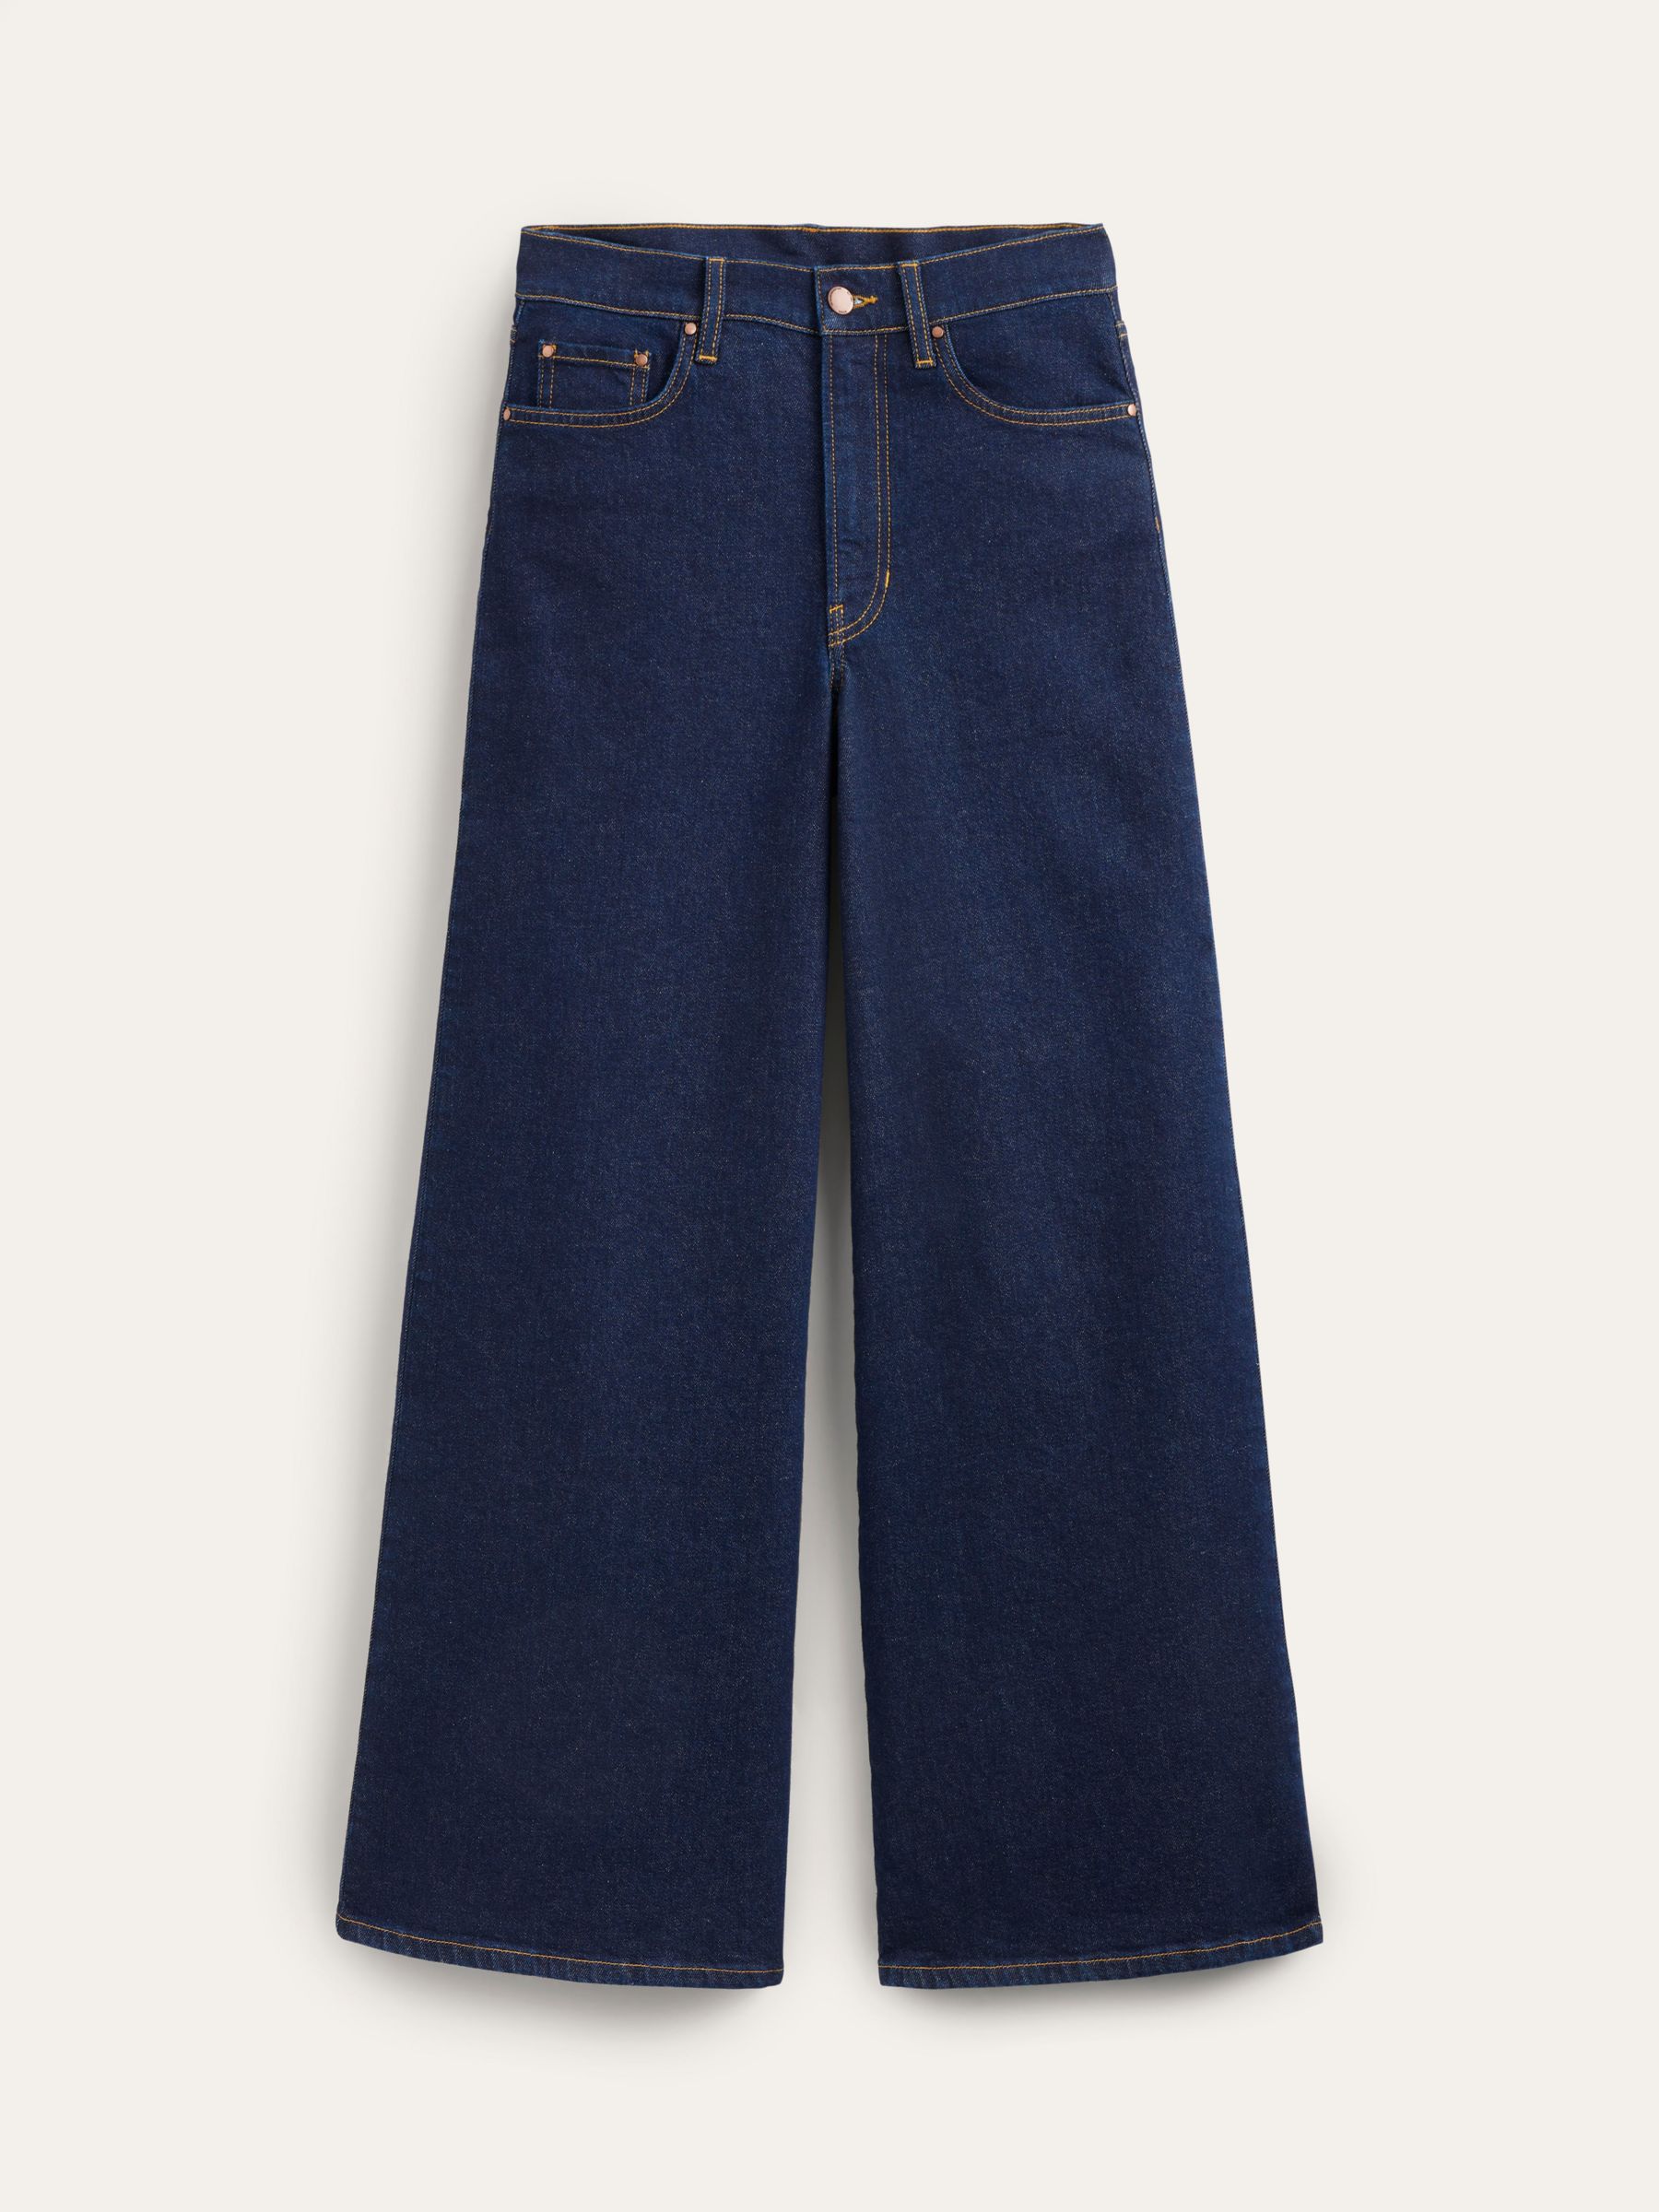 Boden High Rise Wide Leg Jeans, Indigo at John Lewis & Partners